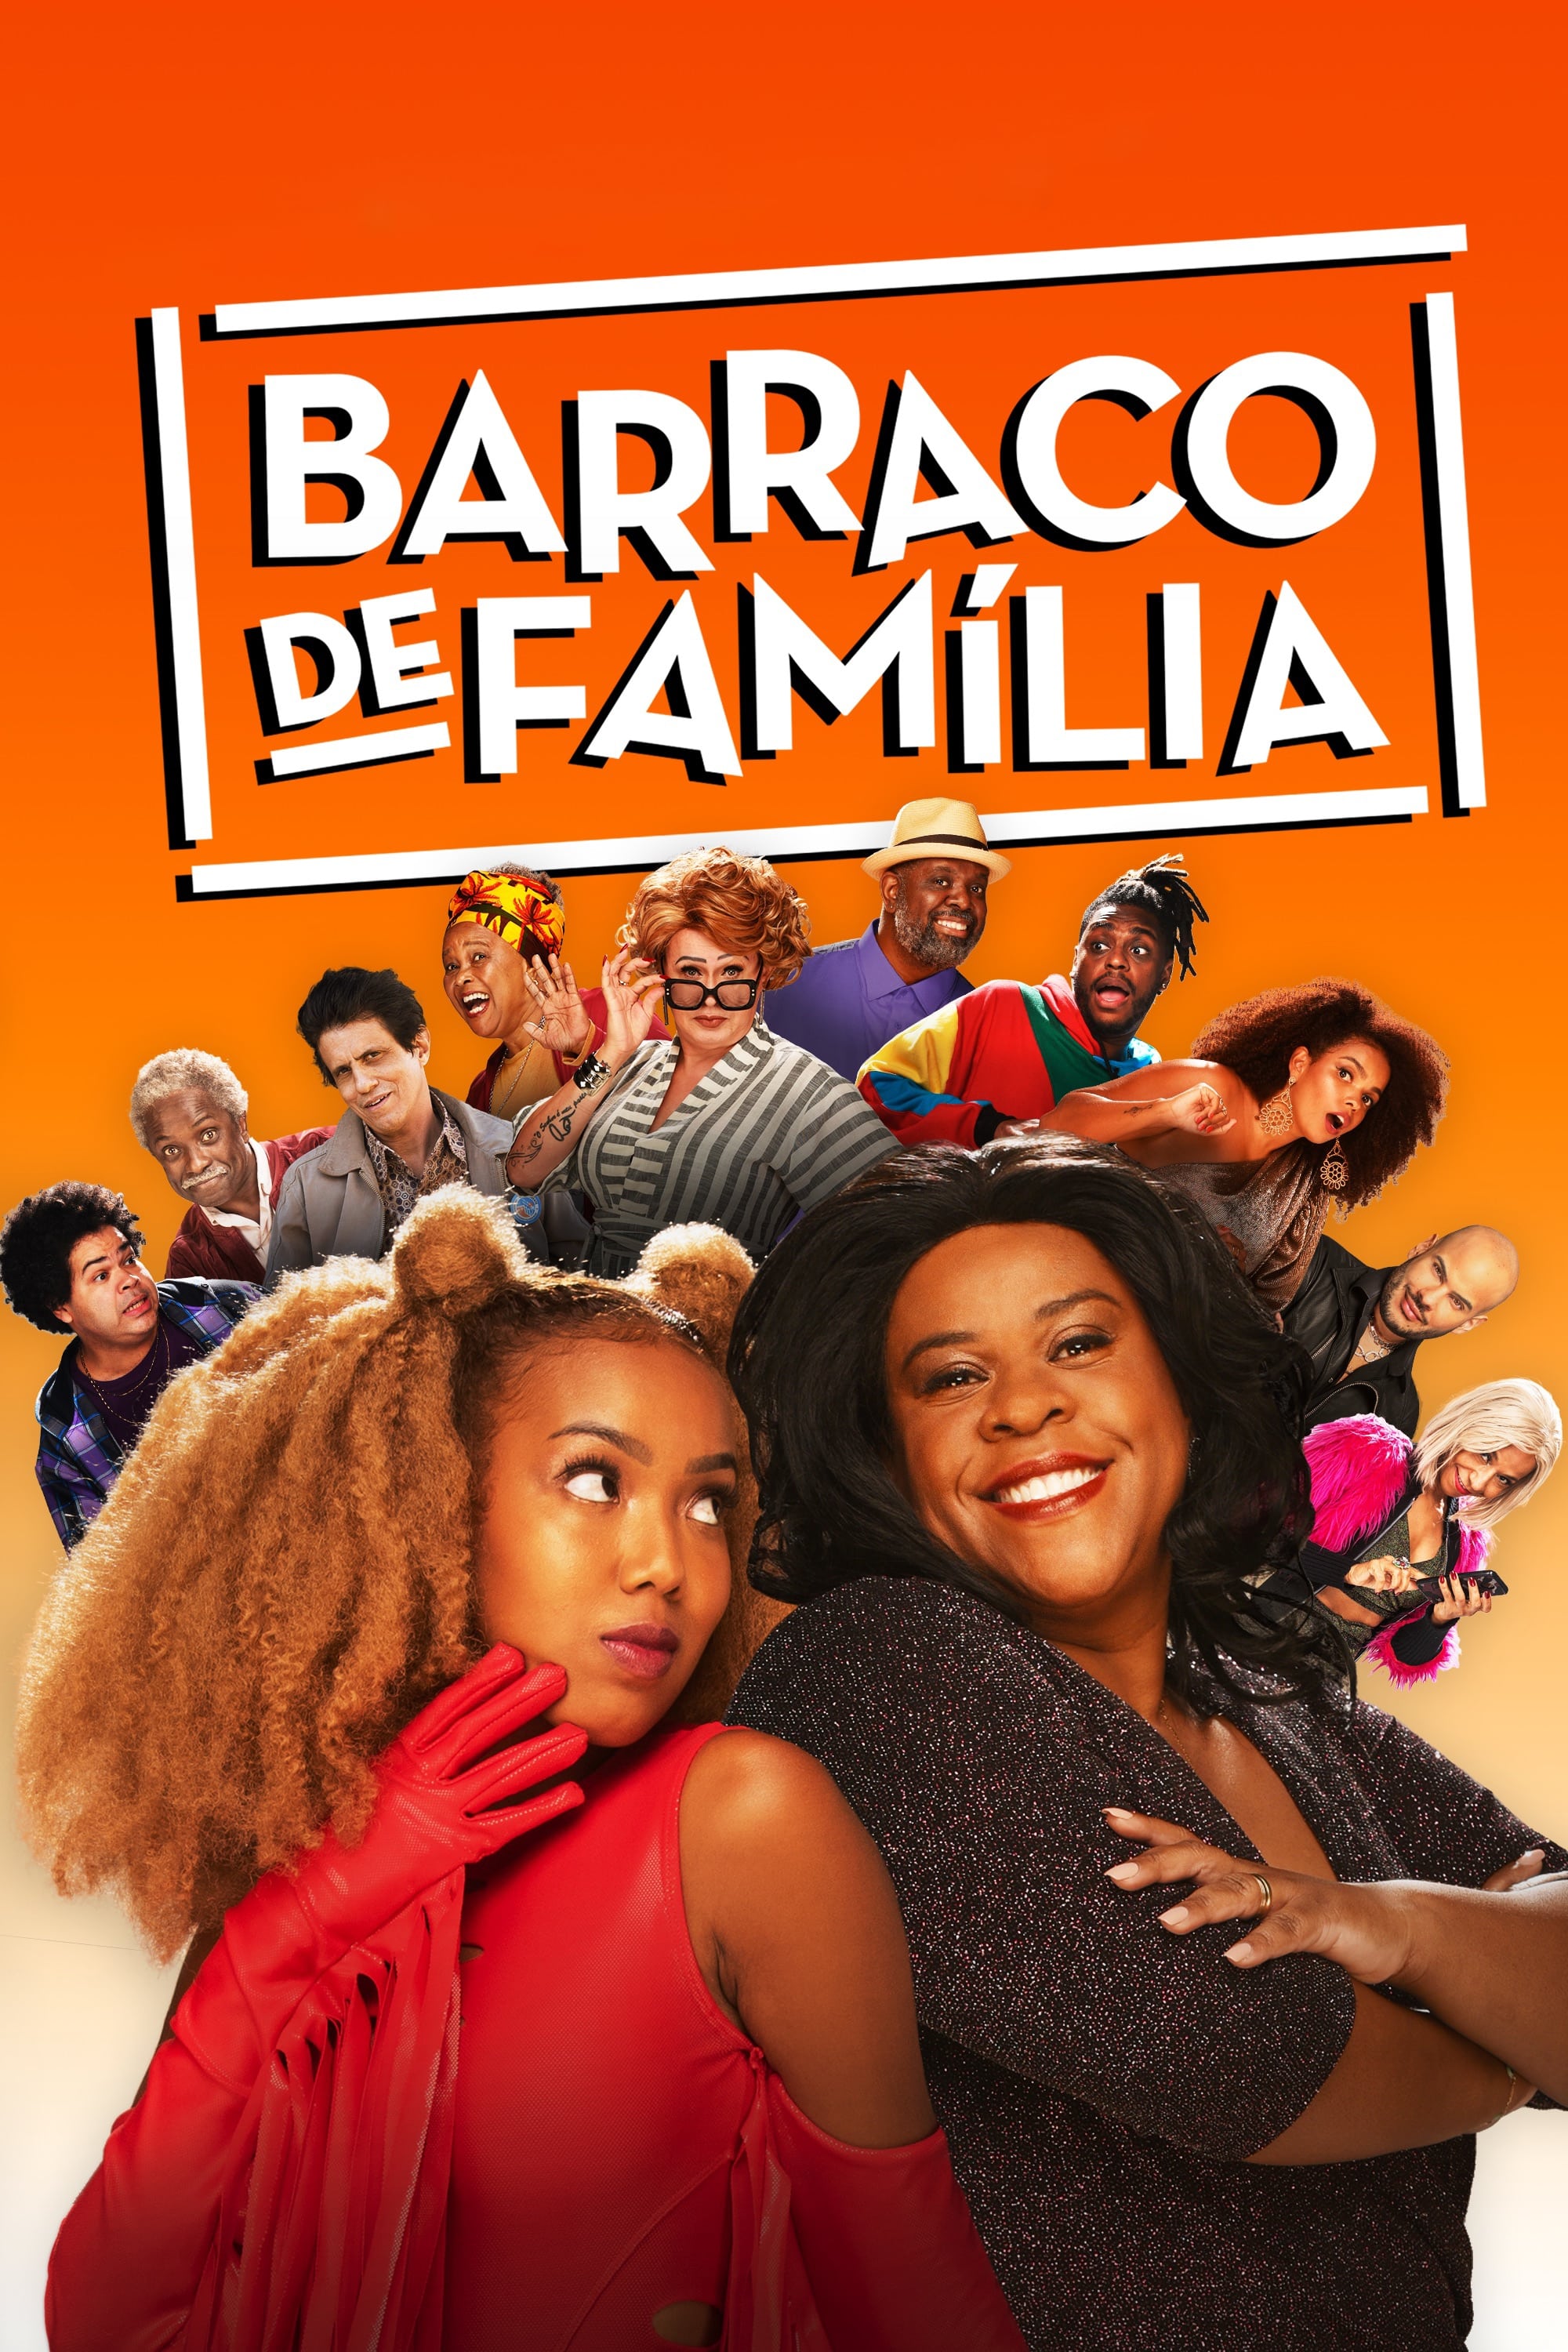 Barraco de Família film